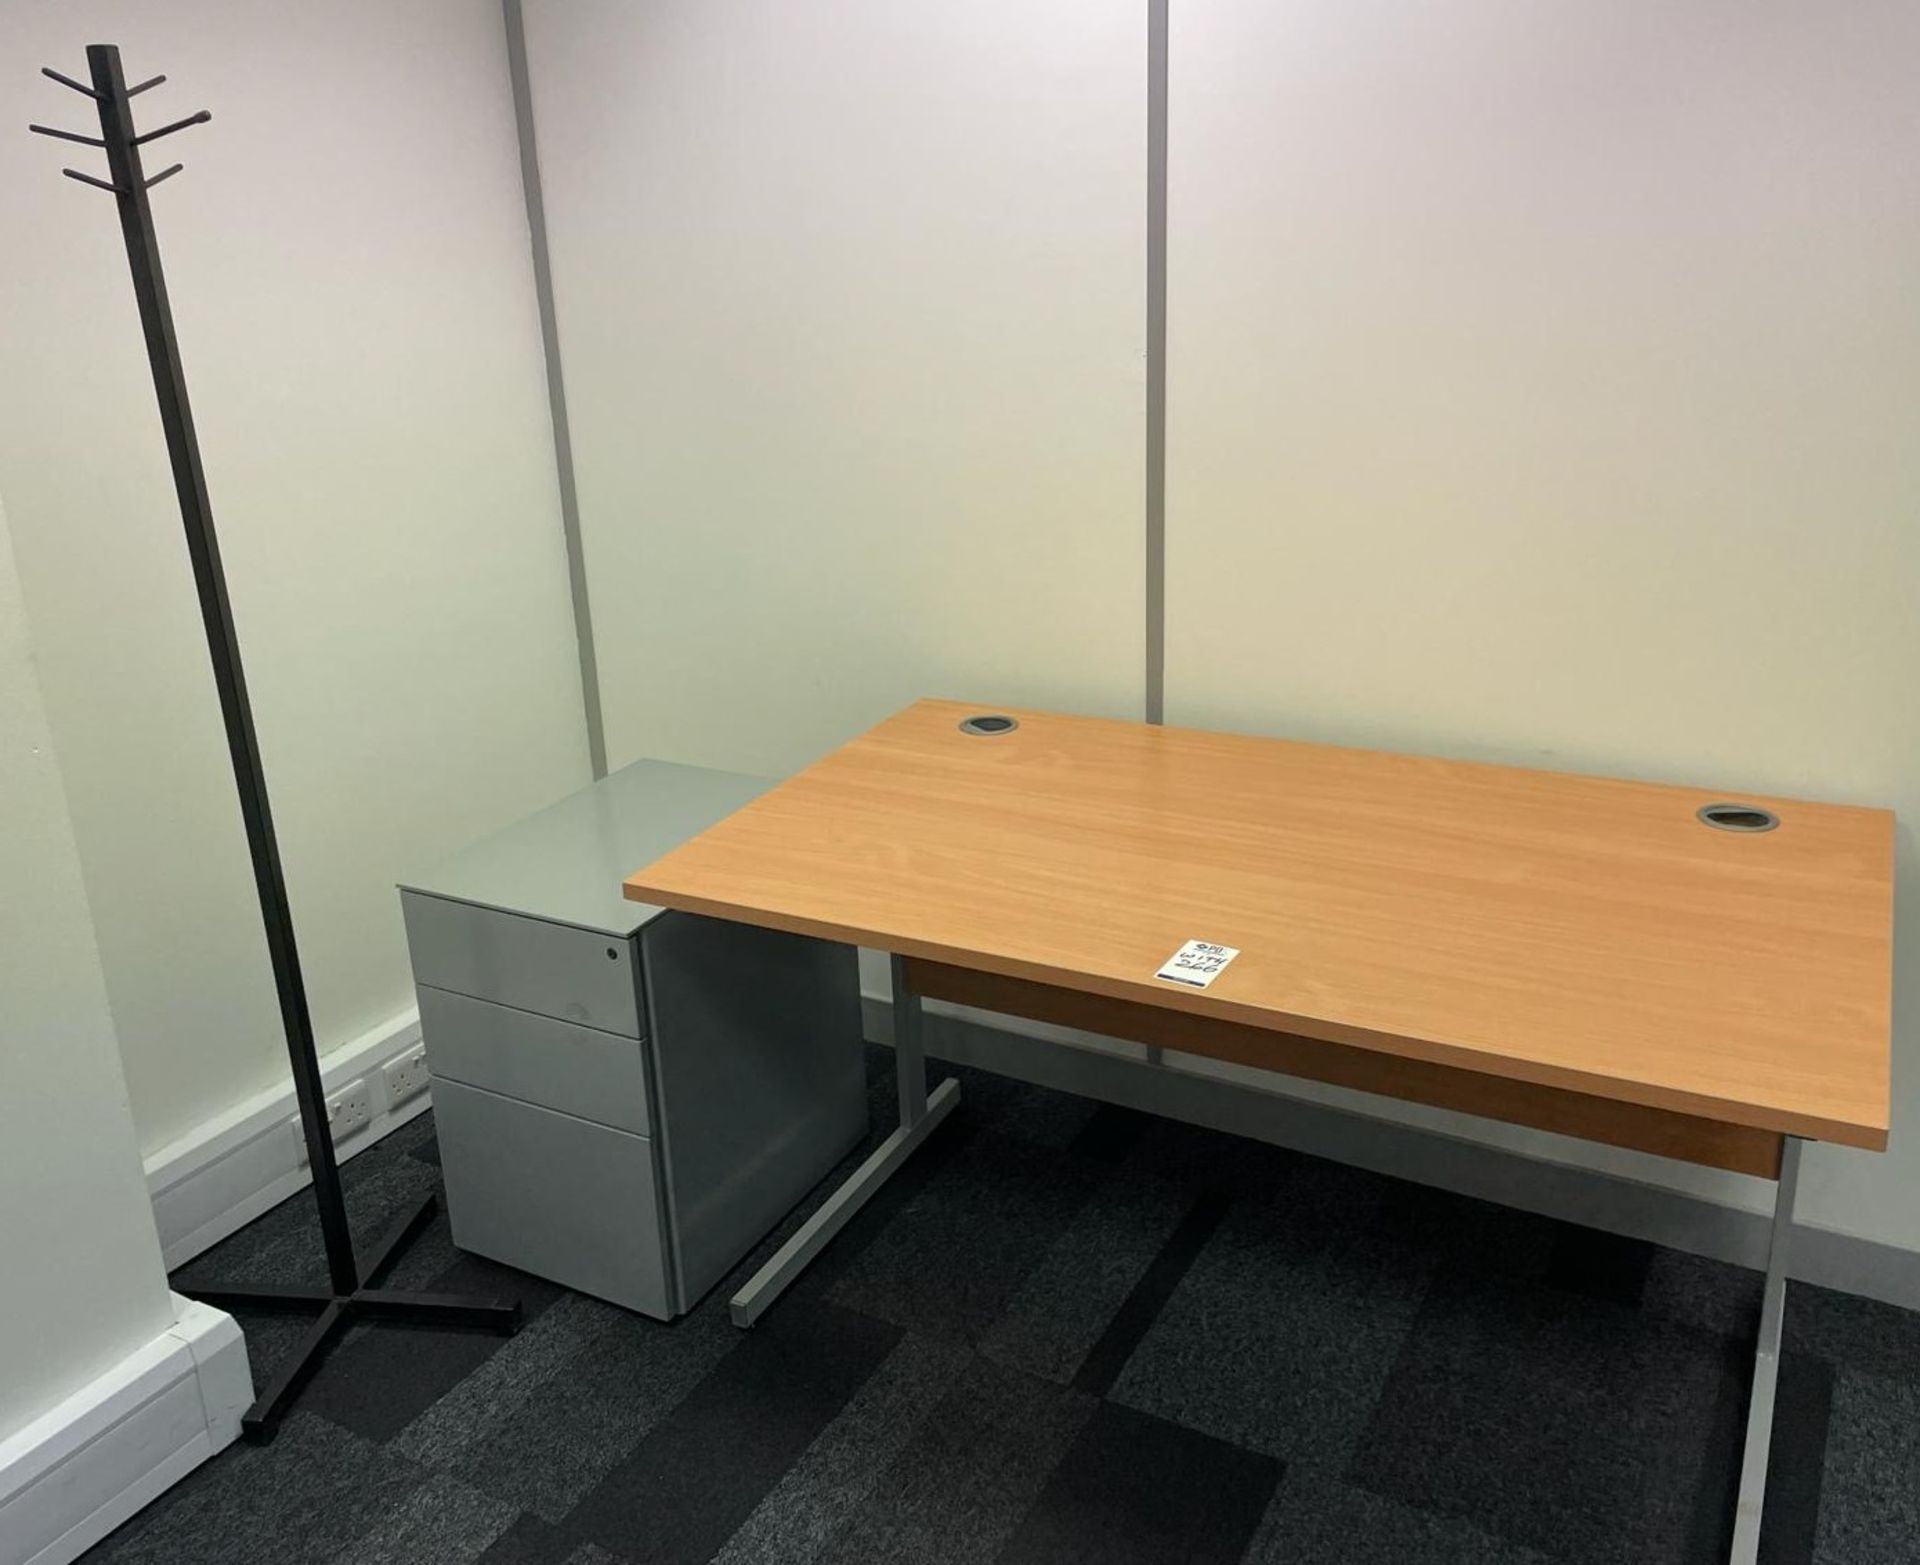 2 Light Oak Effect Desks & 2 Pedestals, 3-Drawer (Located Rugby. Please Refer to General Notes) - Image 2 of 2